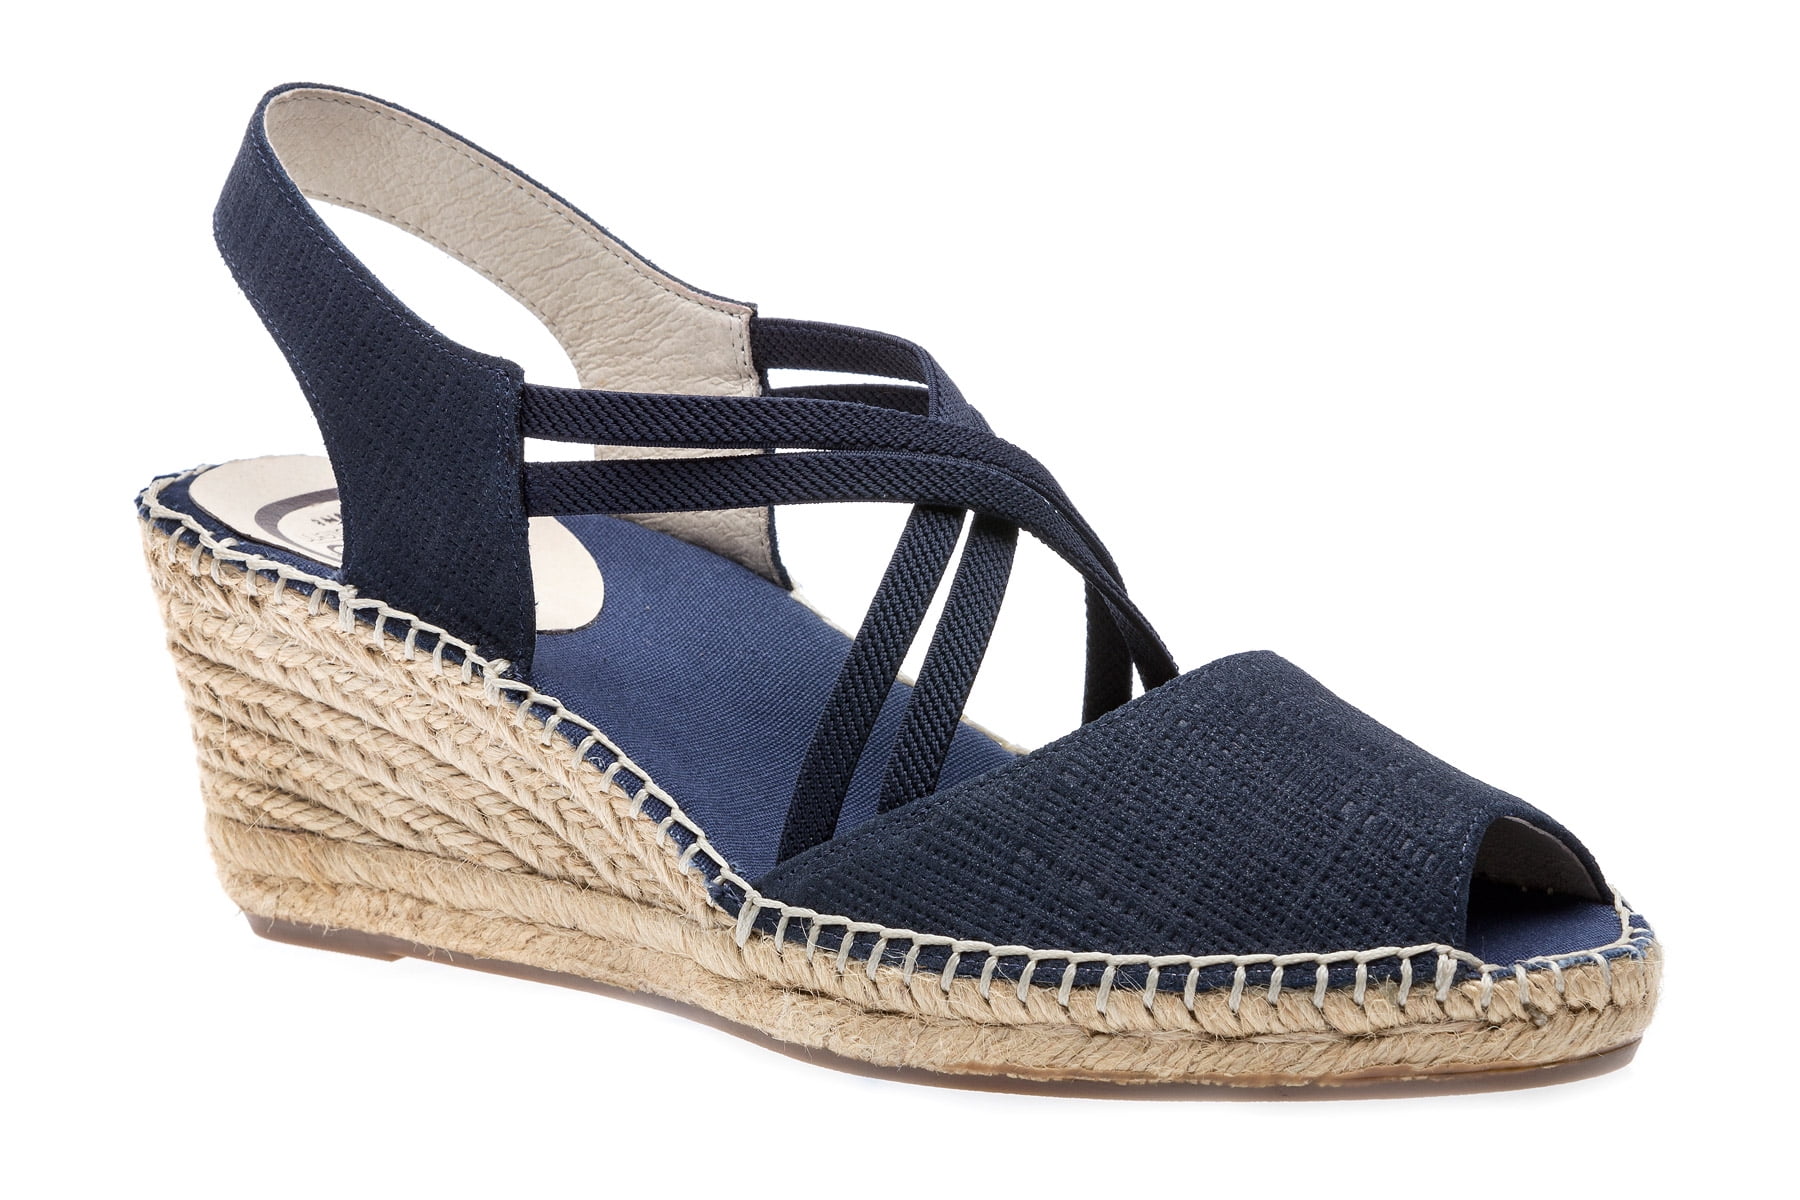 ABEO Delano Metatarsal - Wedge Sandals in Blue - Walmart.com